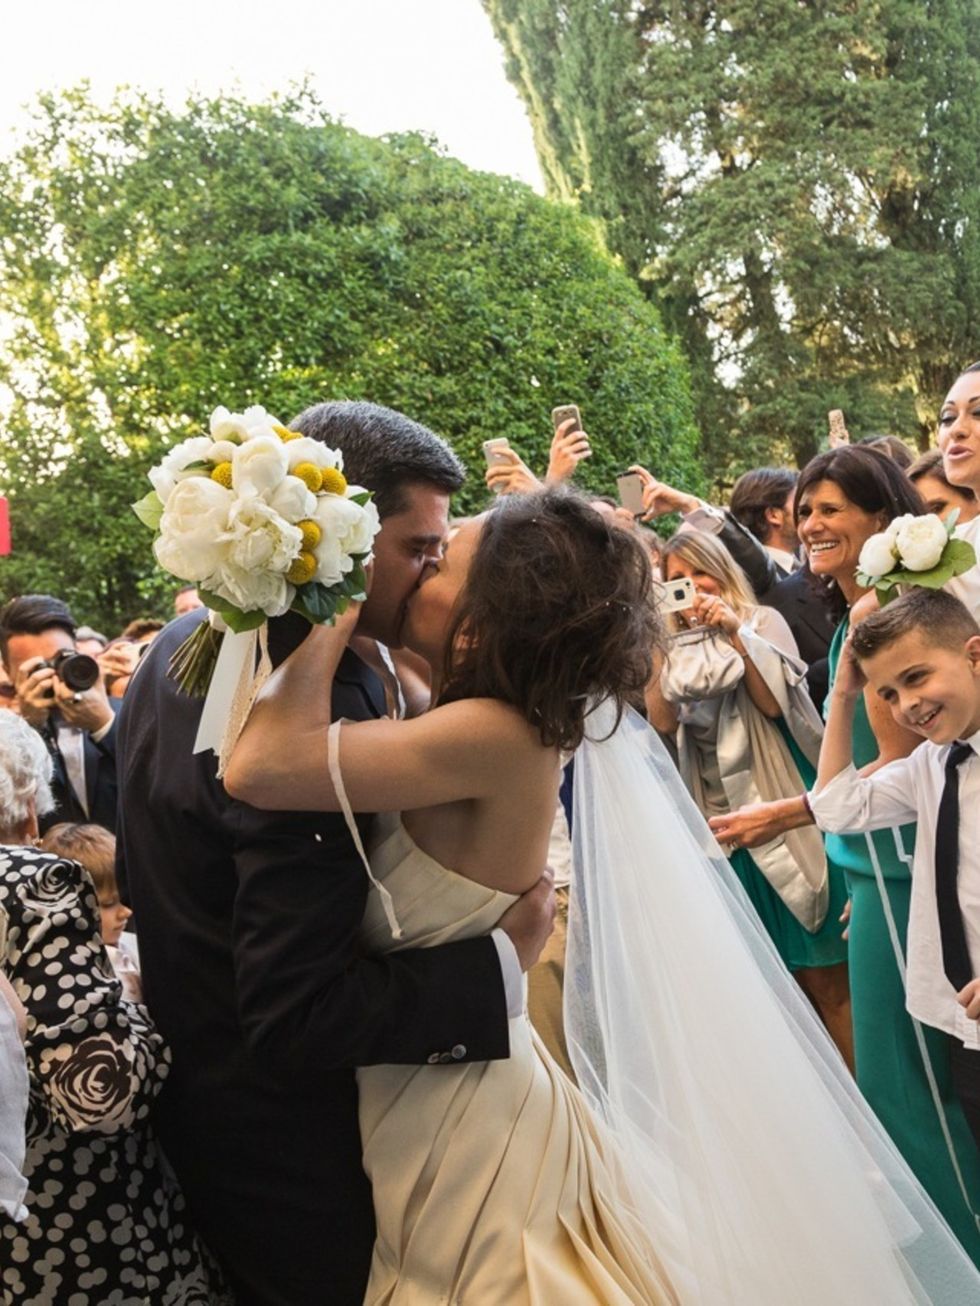 Event, Tradition, Bridal clothing, Petal, Suit, Ceremony, Crowd, Wedding dress, Dress, Bouquet, 